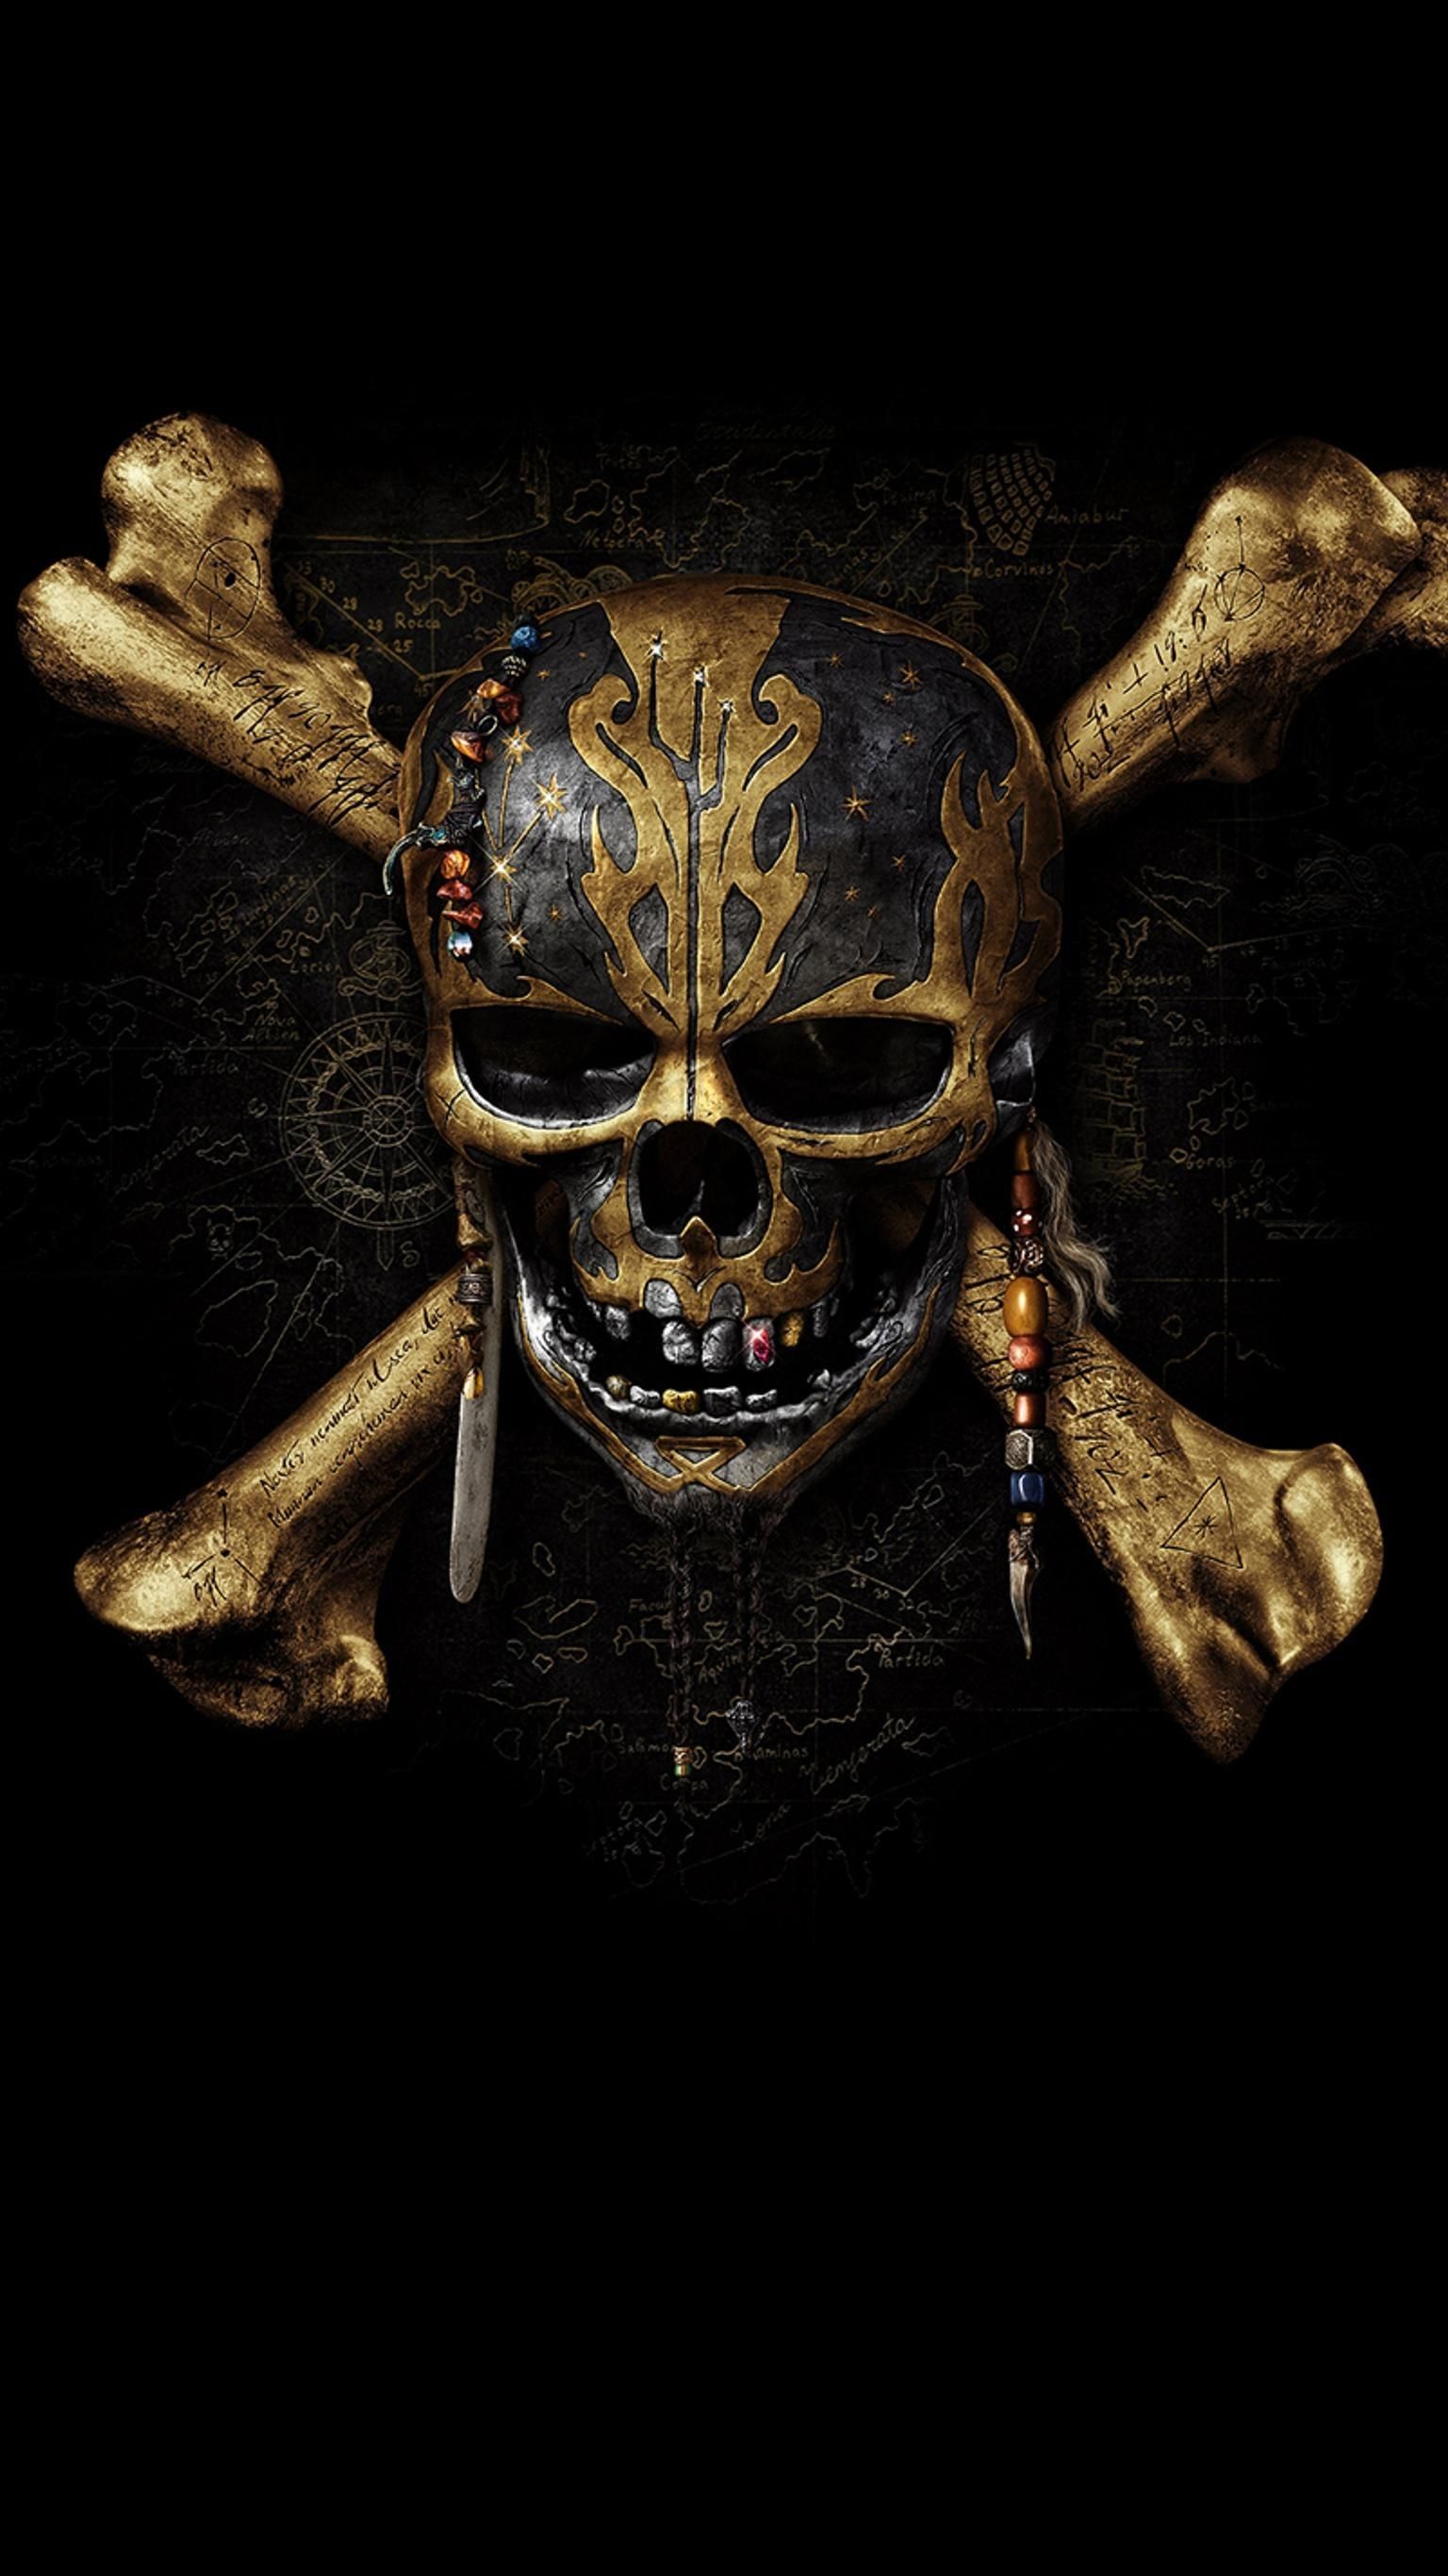 Fresh Pirates Of the Caribbean 5 Skull Wallpaper. Skull wallpaper, Pirate skull tattoos, Pirate art